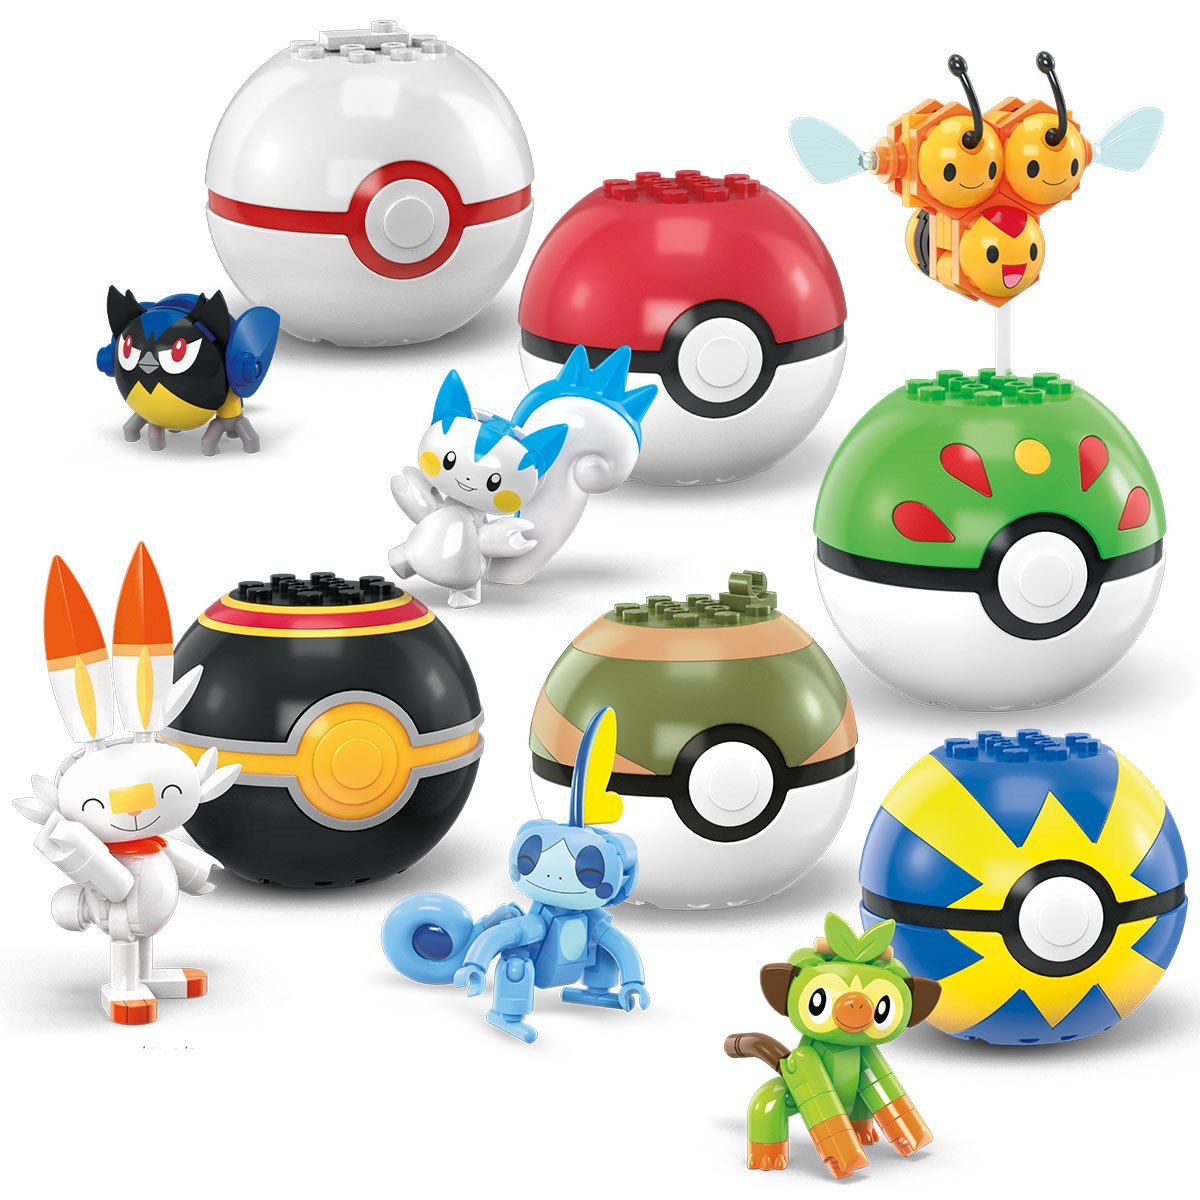 MEGA Pokemon Poke Ball Building Toy Kits with Action Figure (1